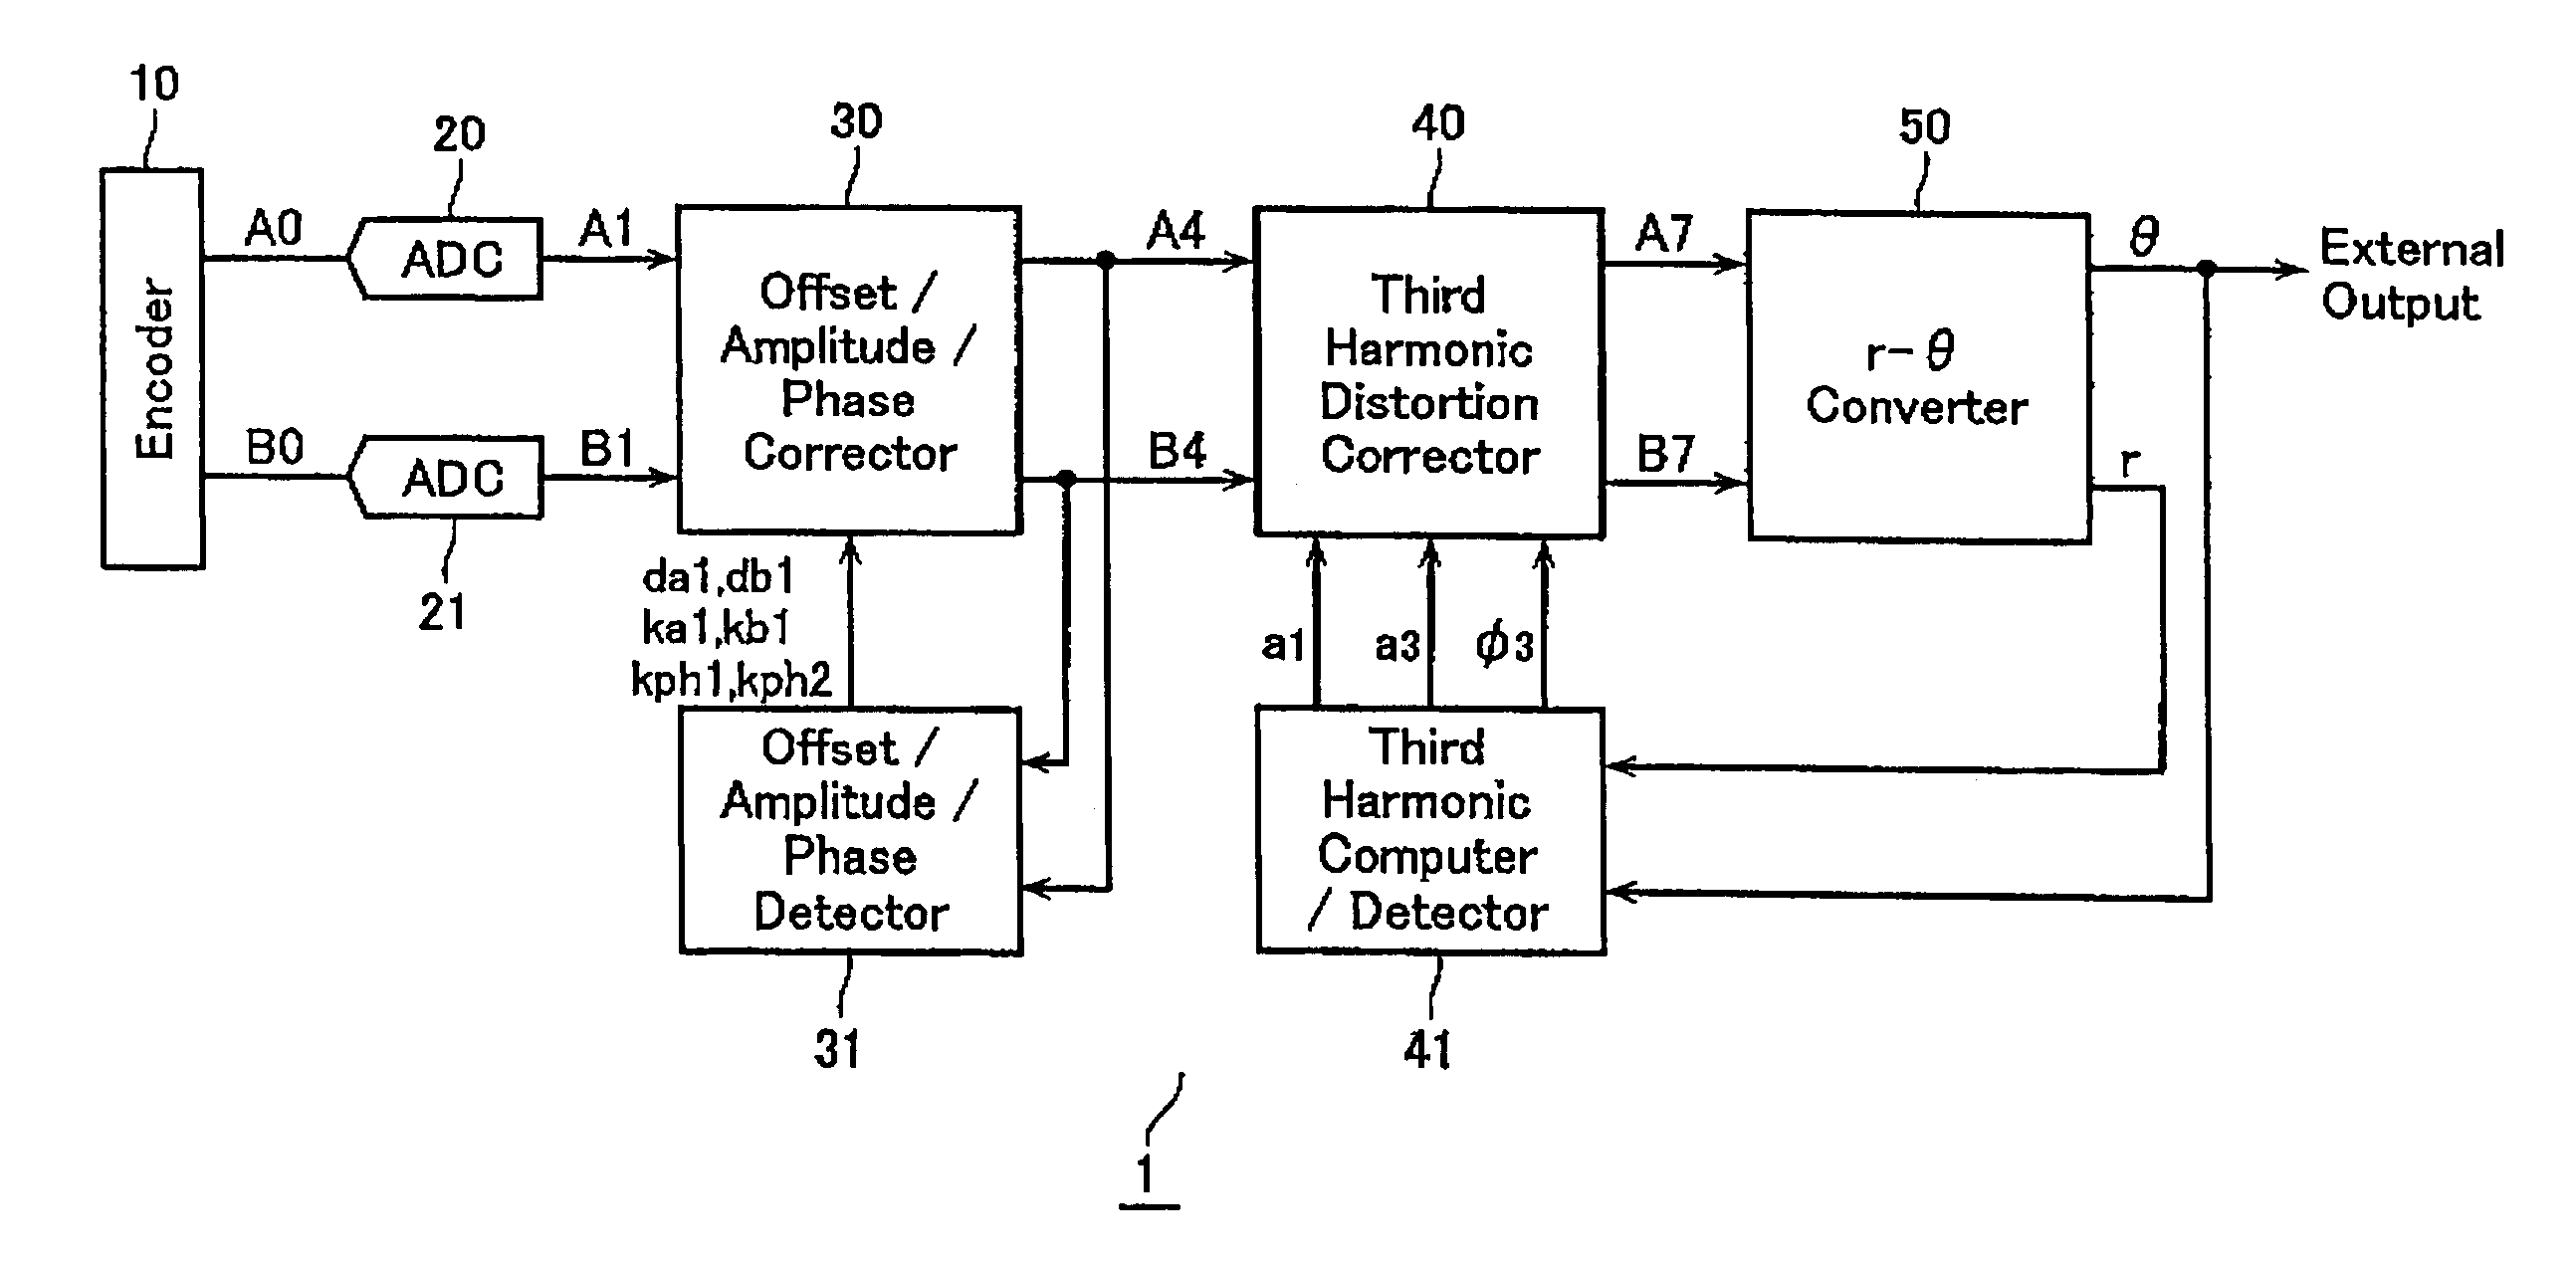 Encoder output signal correction apparatus and method